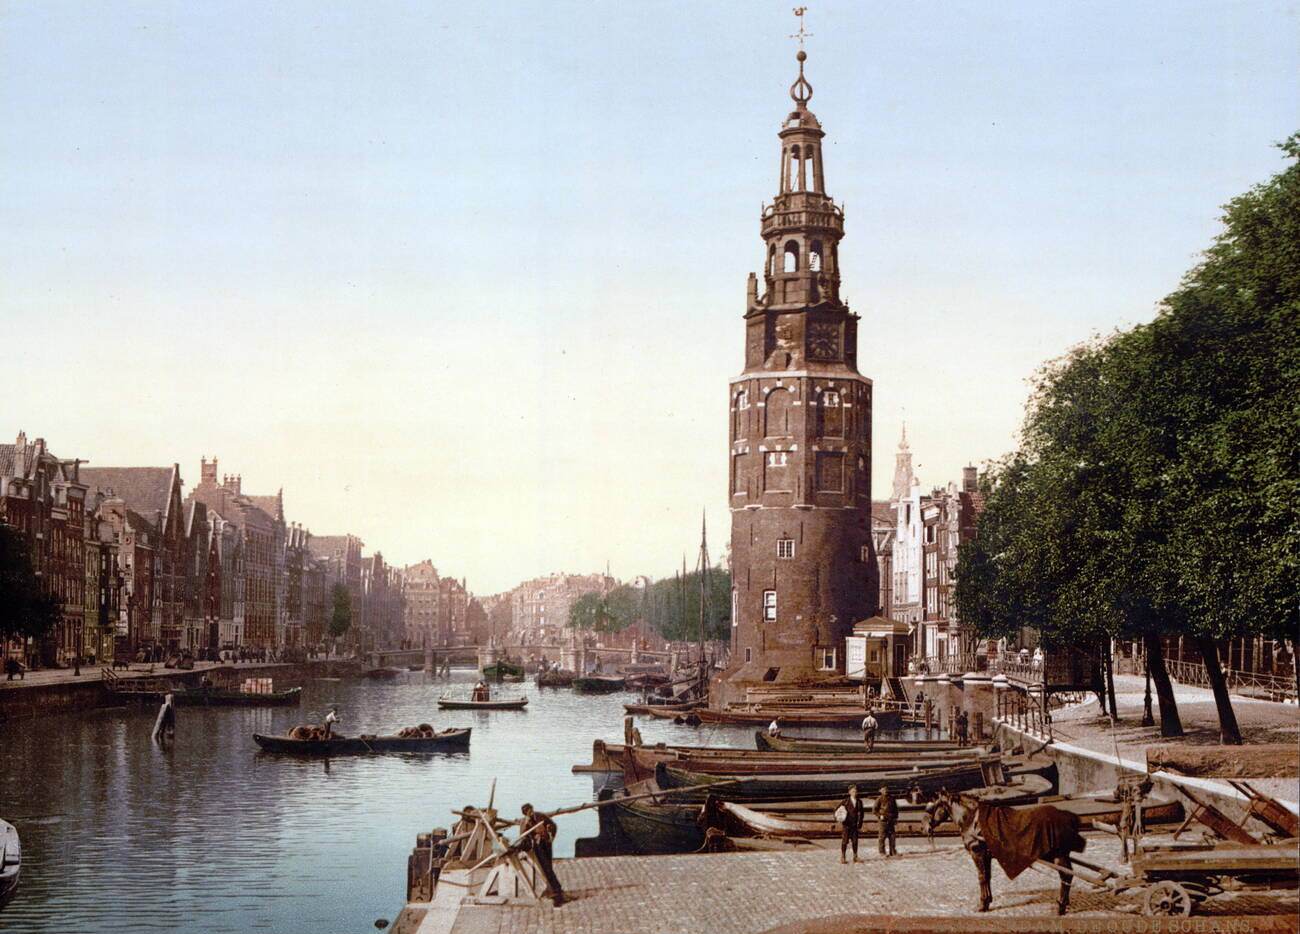 Montelbaanstoren tower on bank of the canal Oudeschans in Amsterdam, Netherlands, 1900